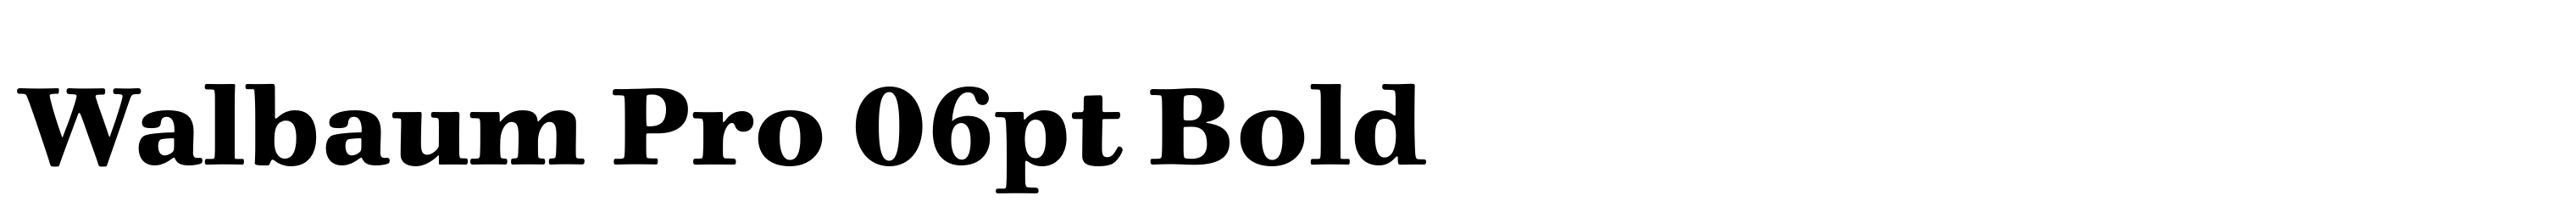 Walbaum Pro 06pt Bold